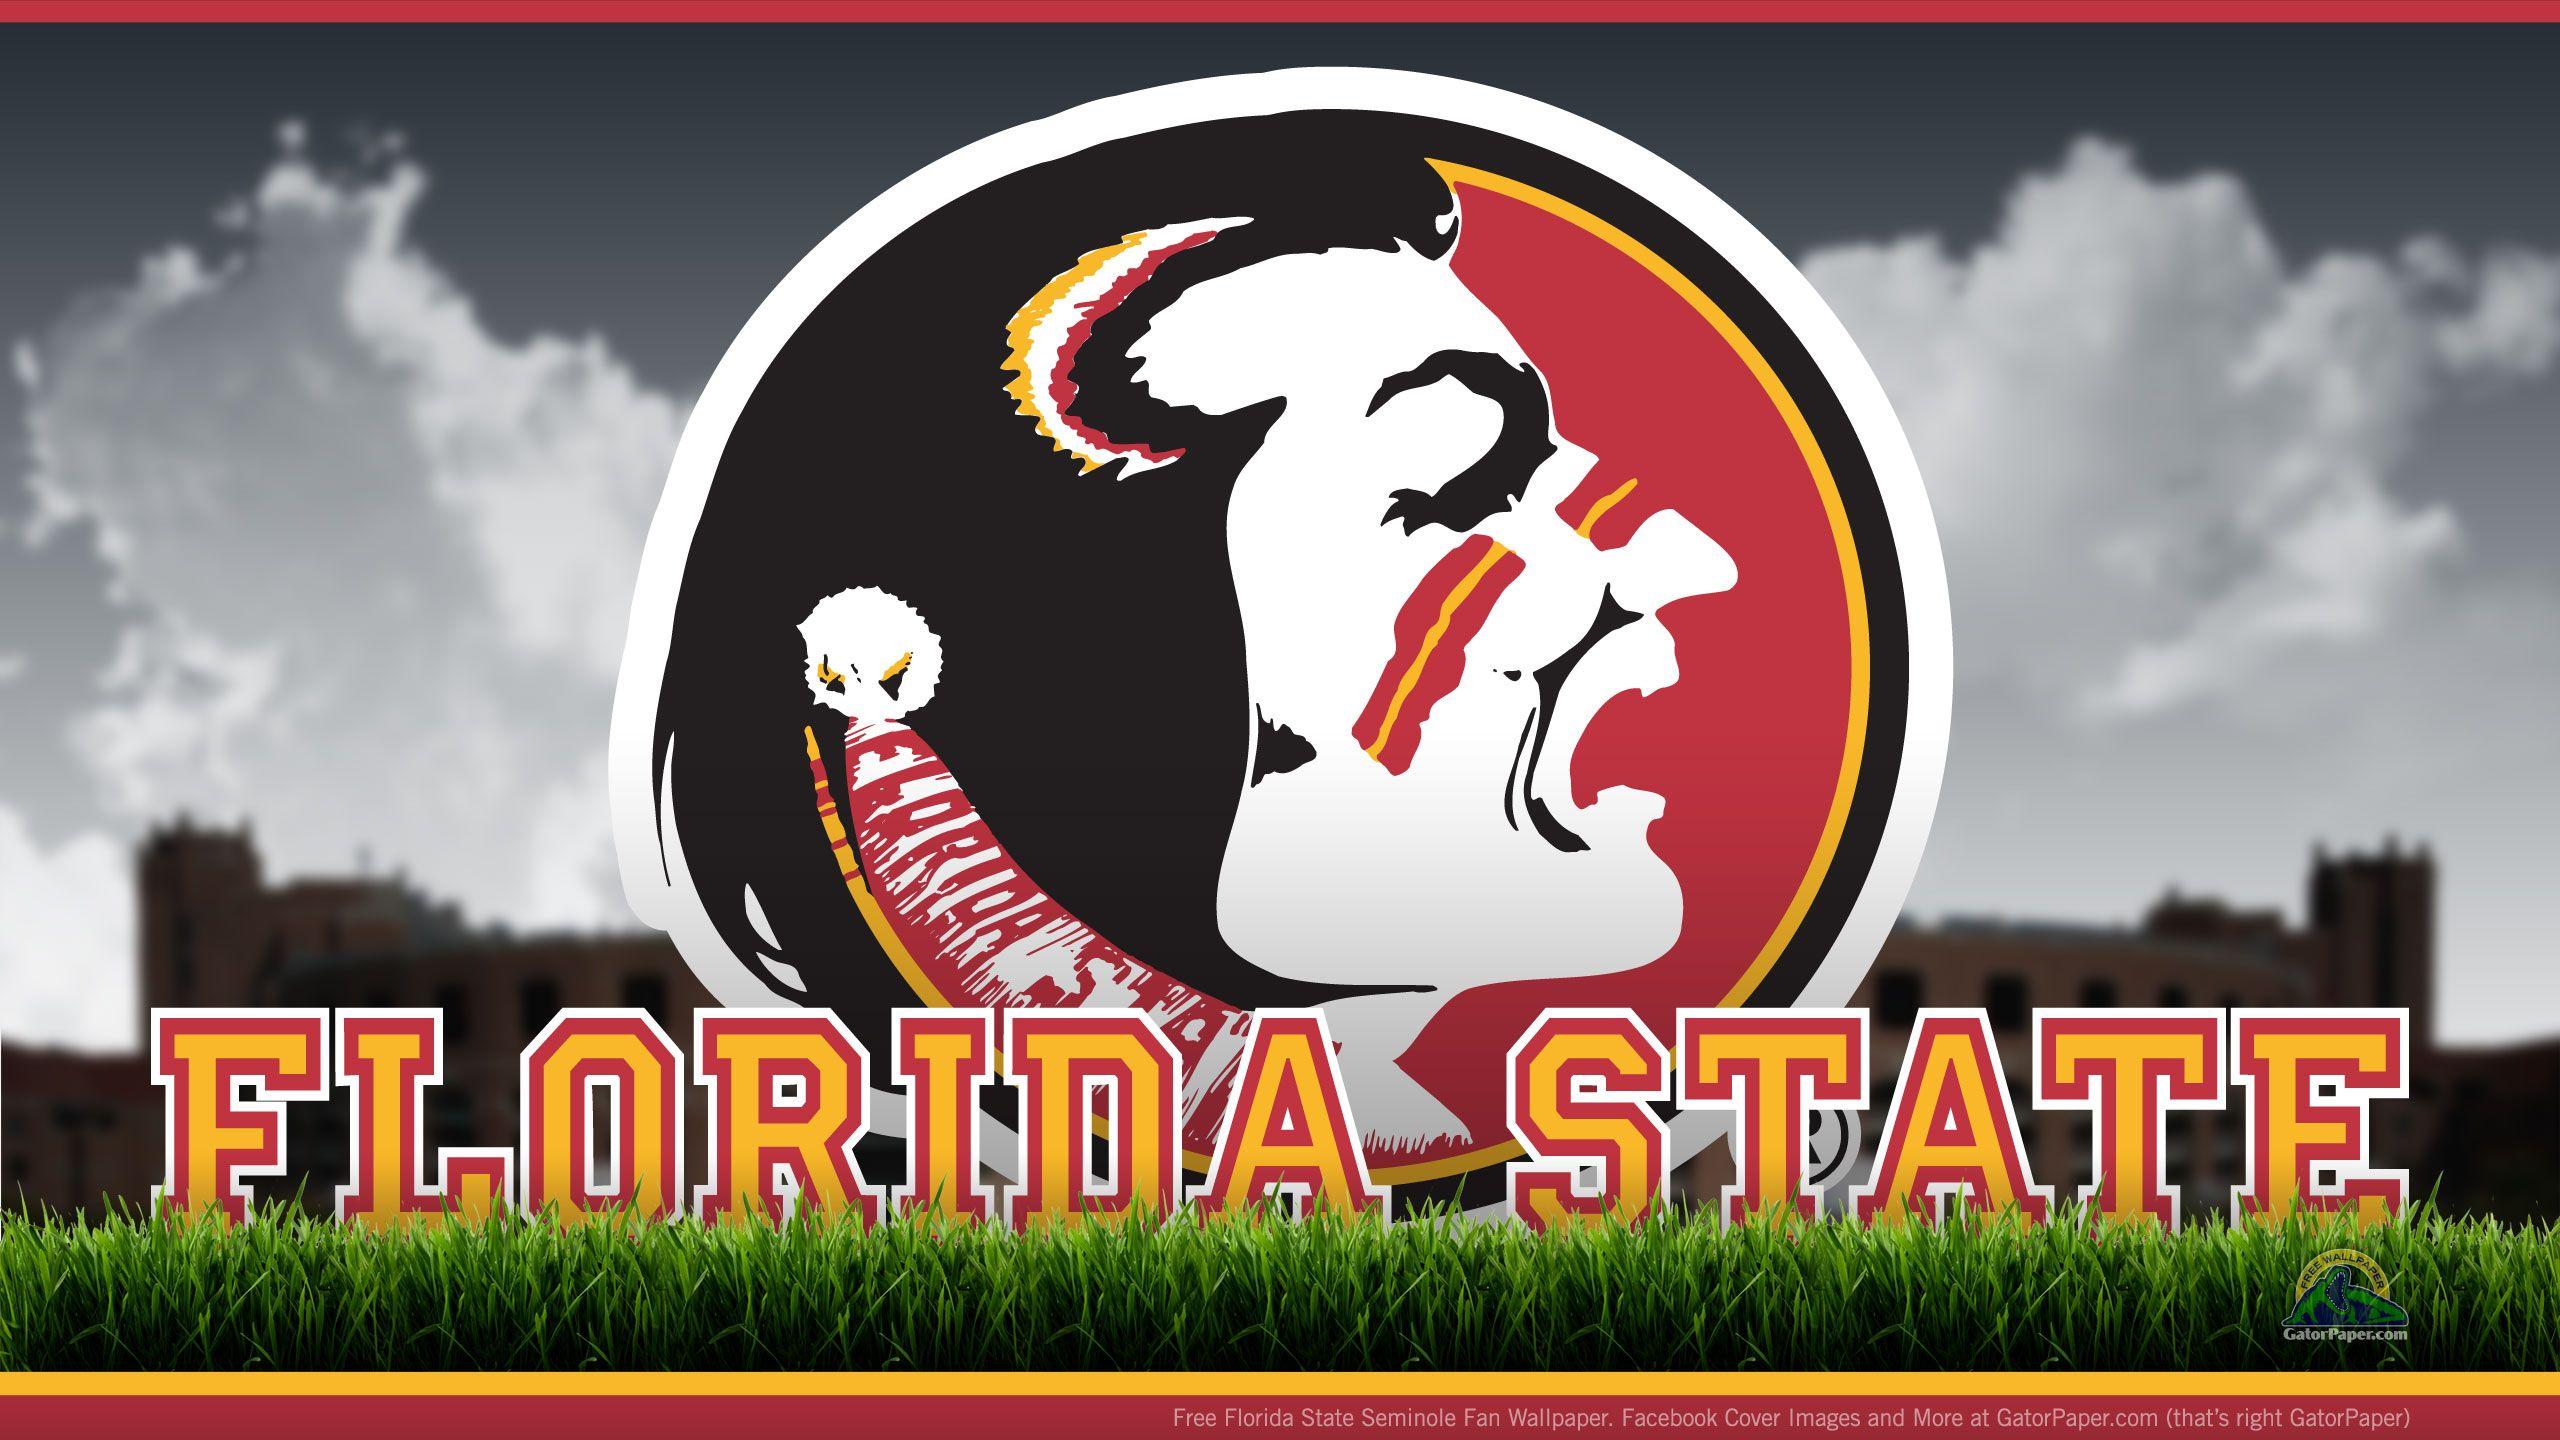 Best image about Florida state. Logos, Desktop